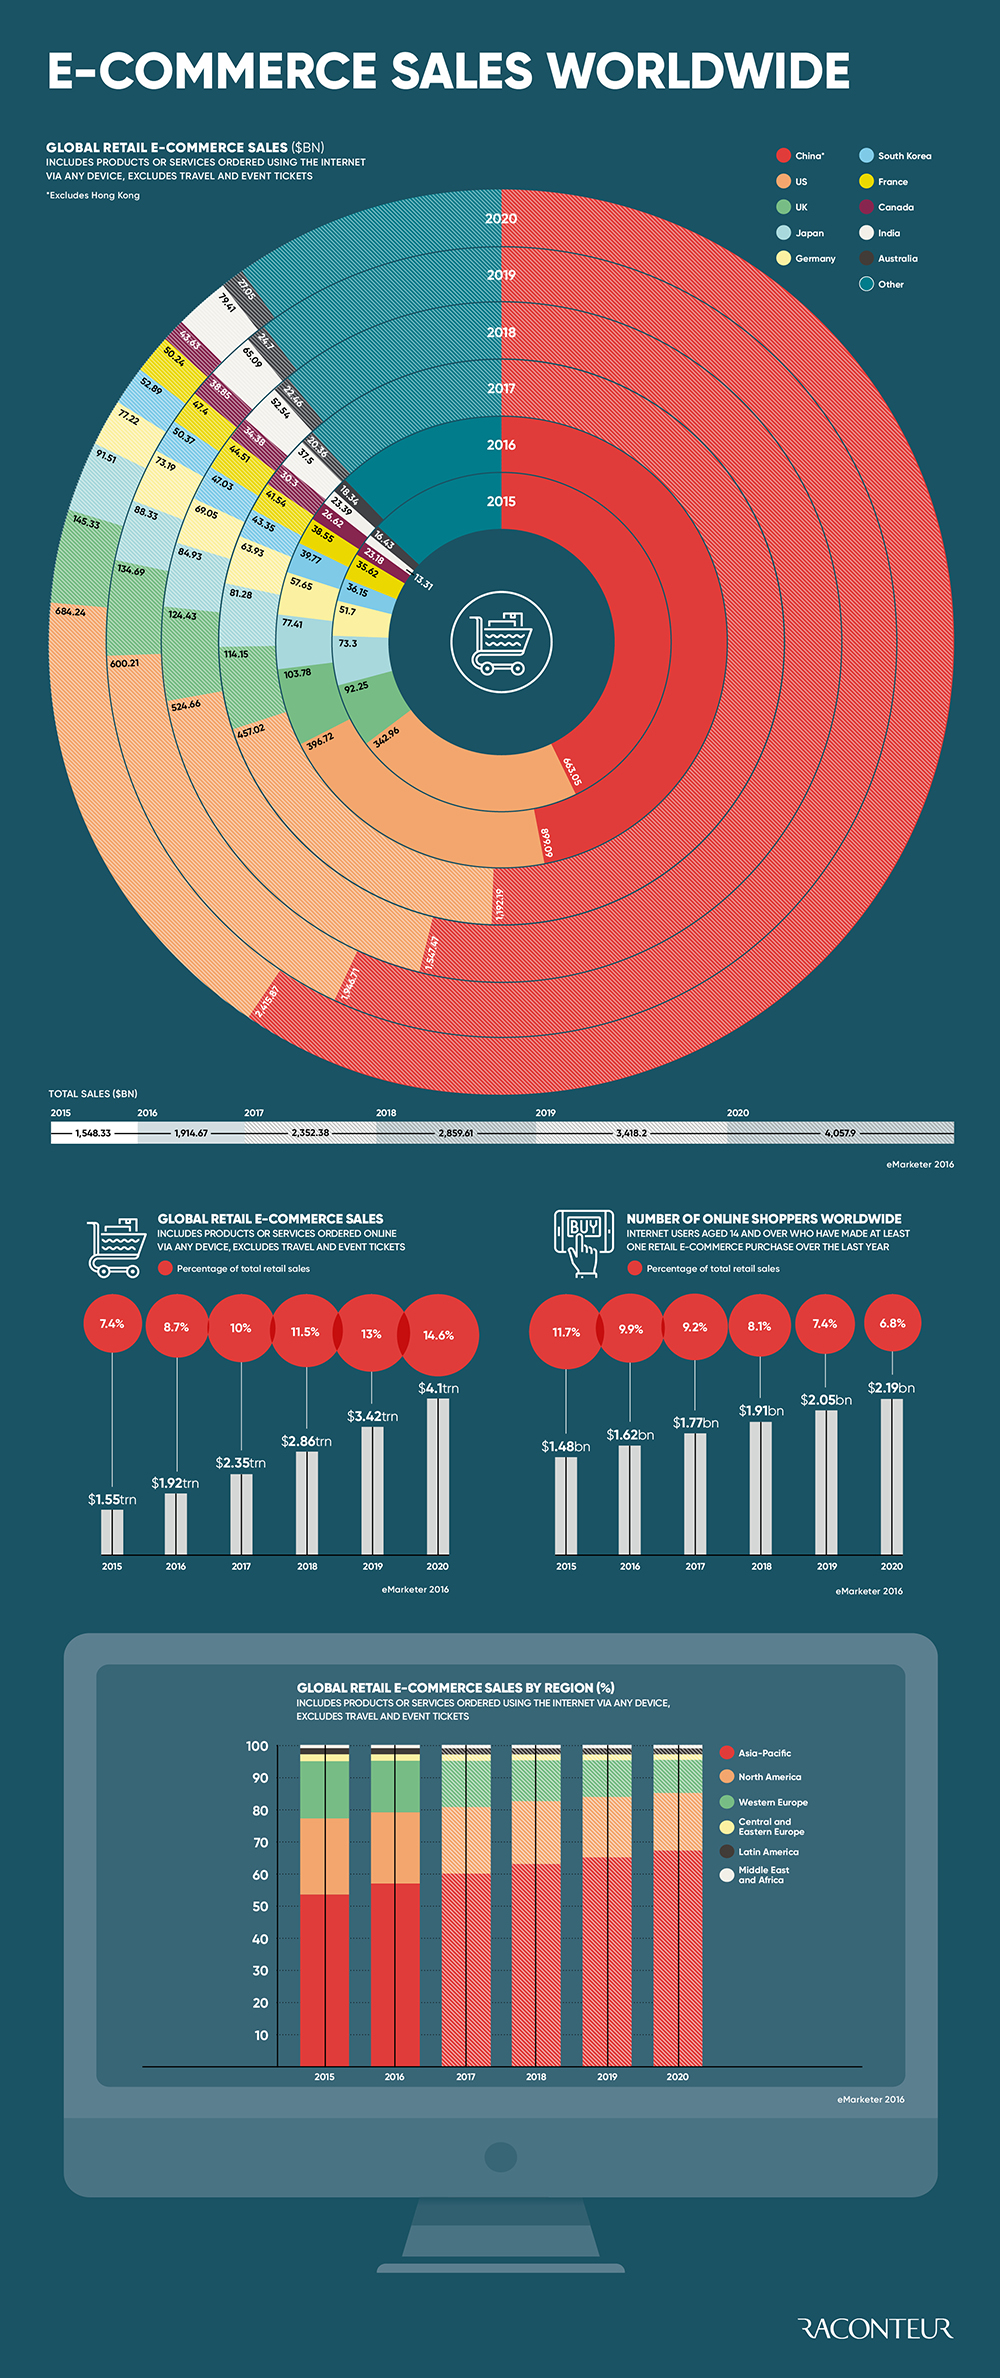 Ecommerce sales worldwide infographic